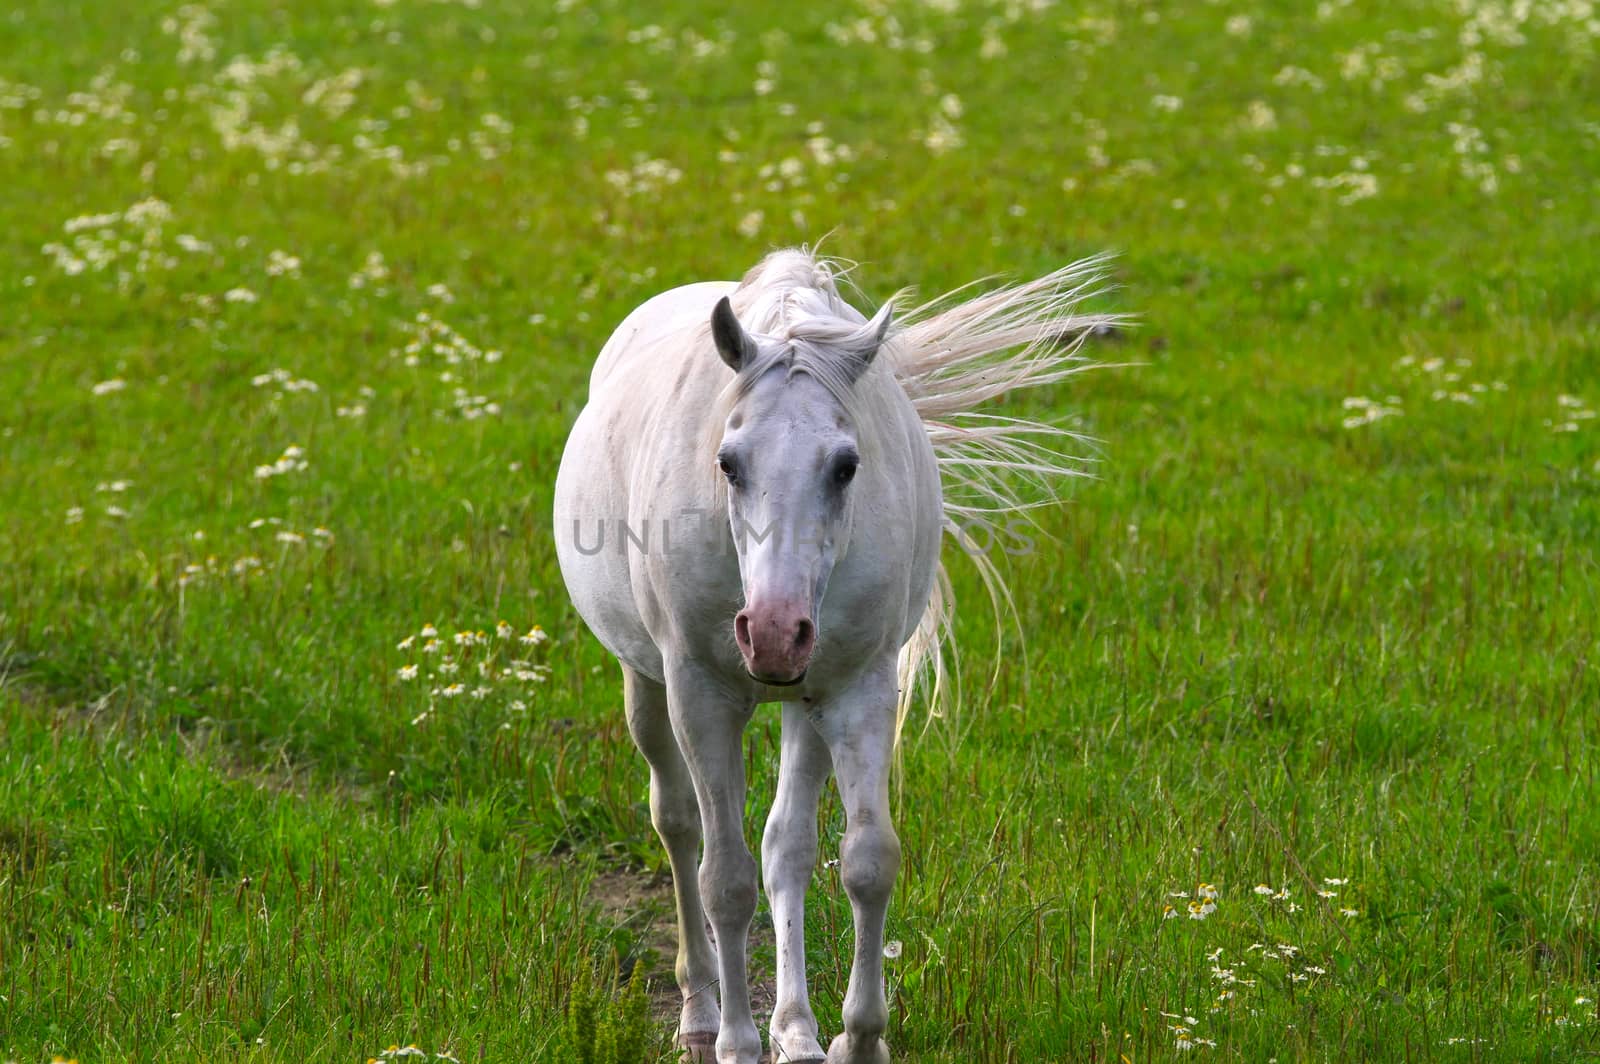 The white horse by Valokuva24